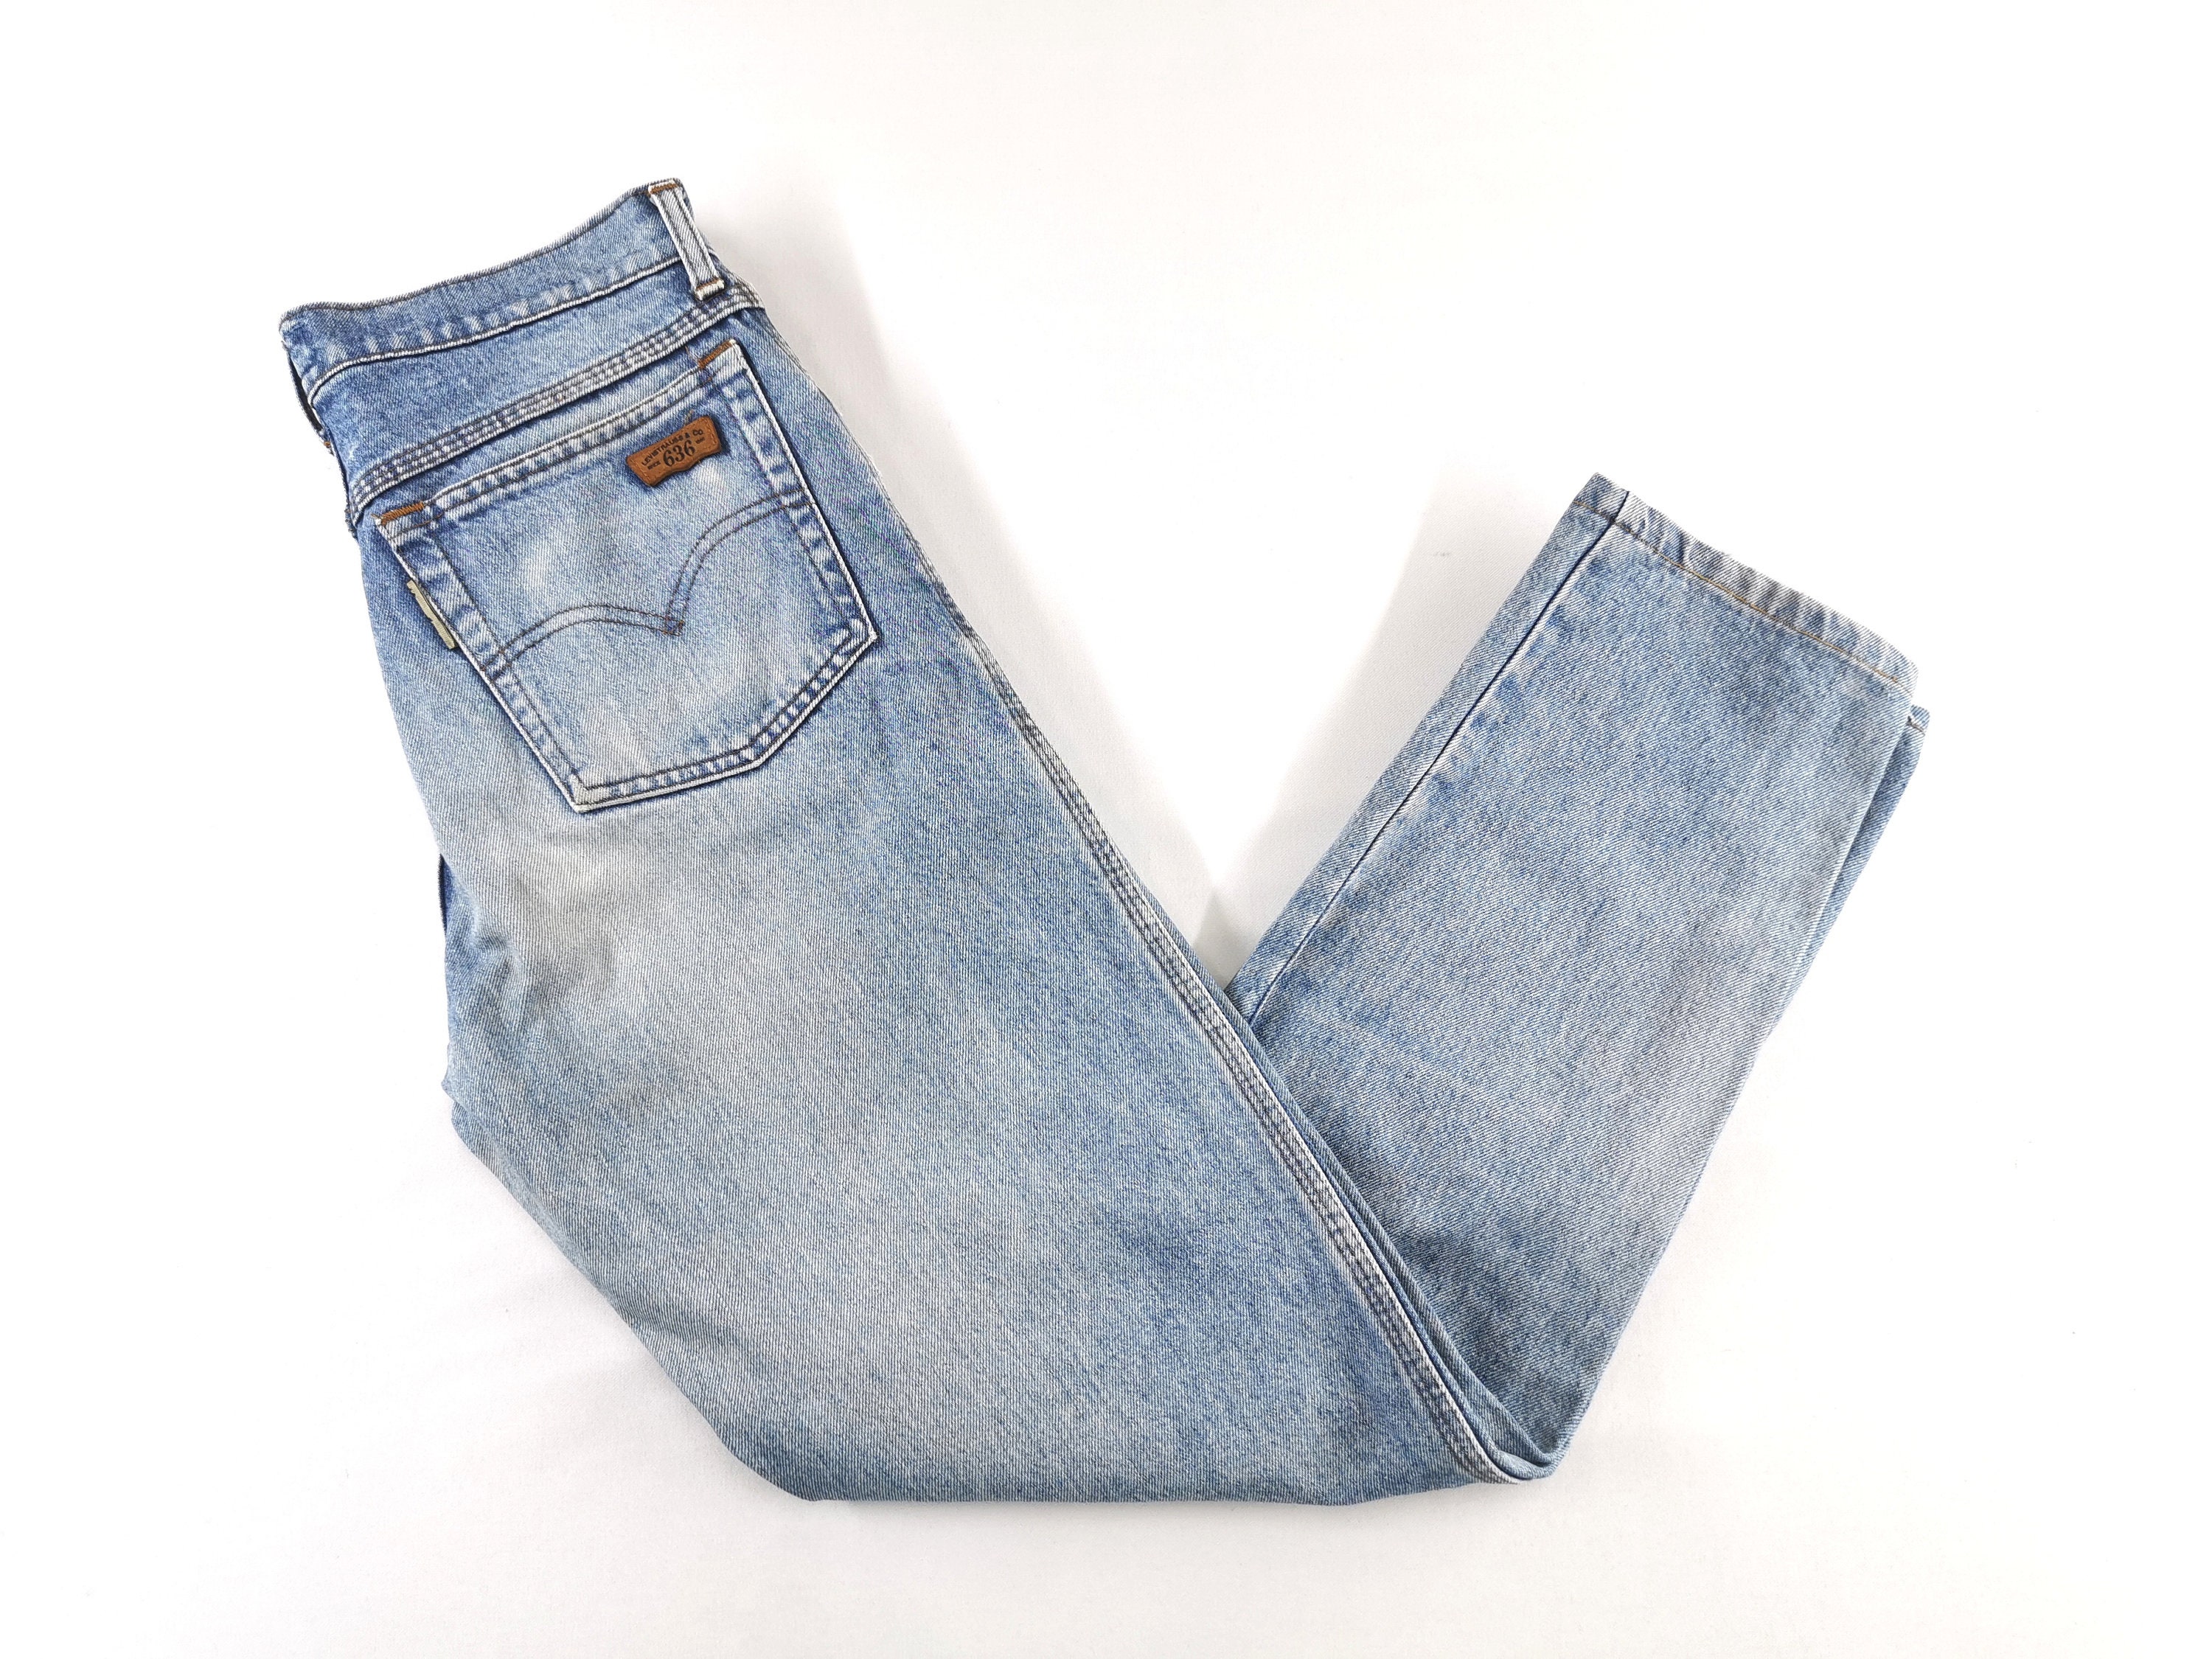 Levis Jeans Distressed Vintage Levis 636 Denim Levis 636 Made | Etsy